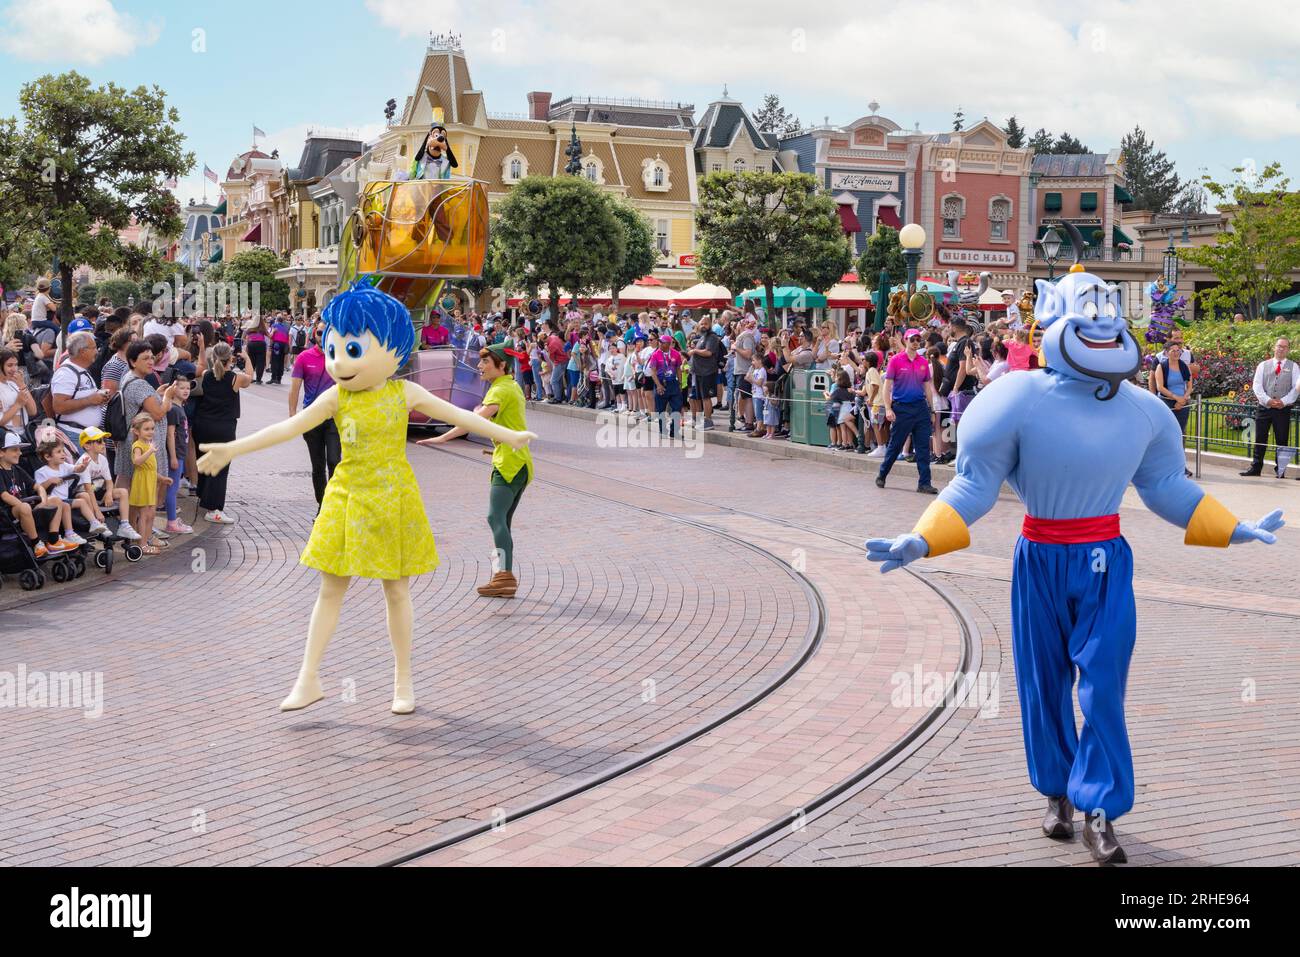 Disneyland Paris - the Disney Parade with disney characters Peter Pan, Joy and The Genie dancing in front of visitors; Disneyland Paris, France Stock Photo